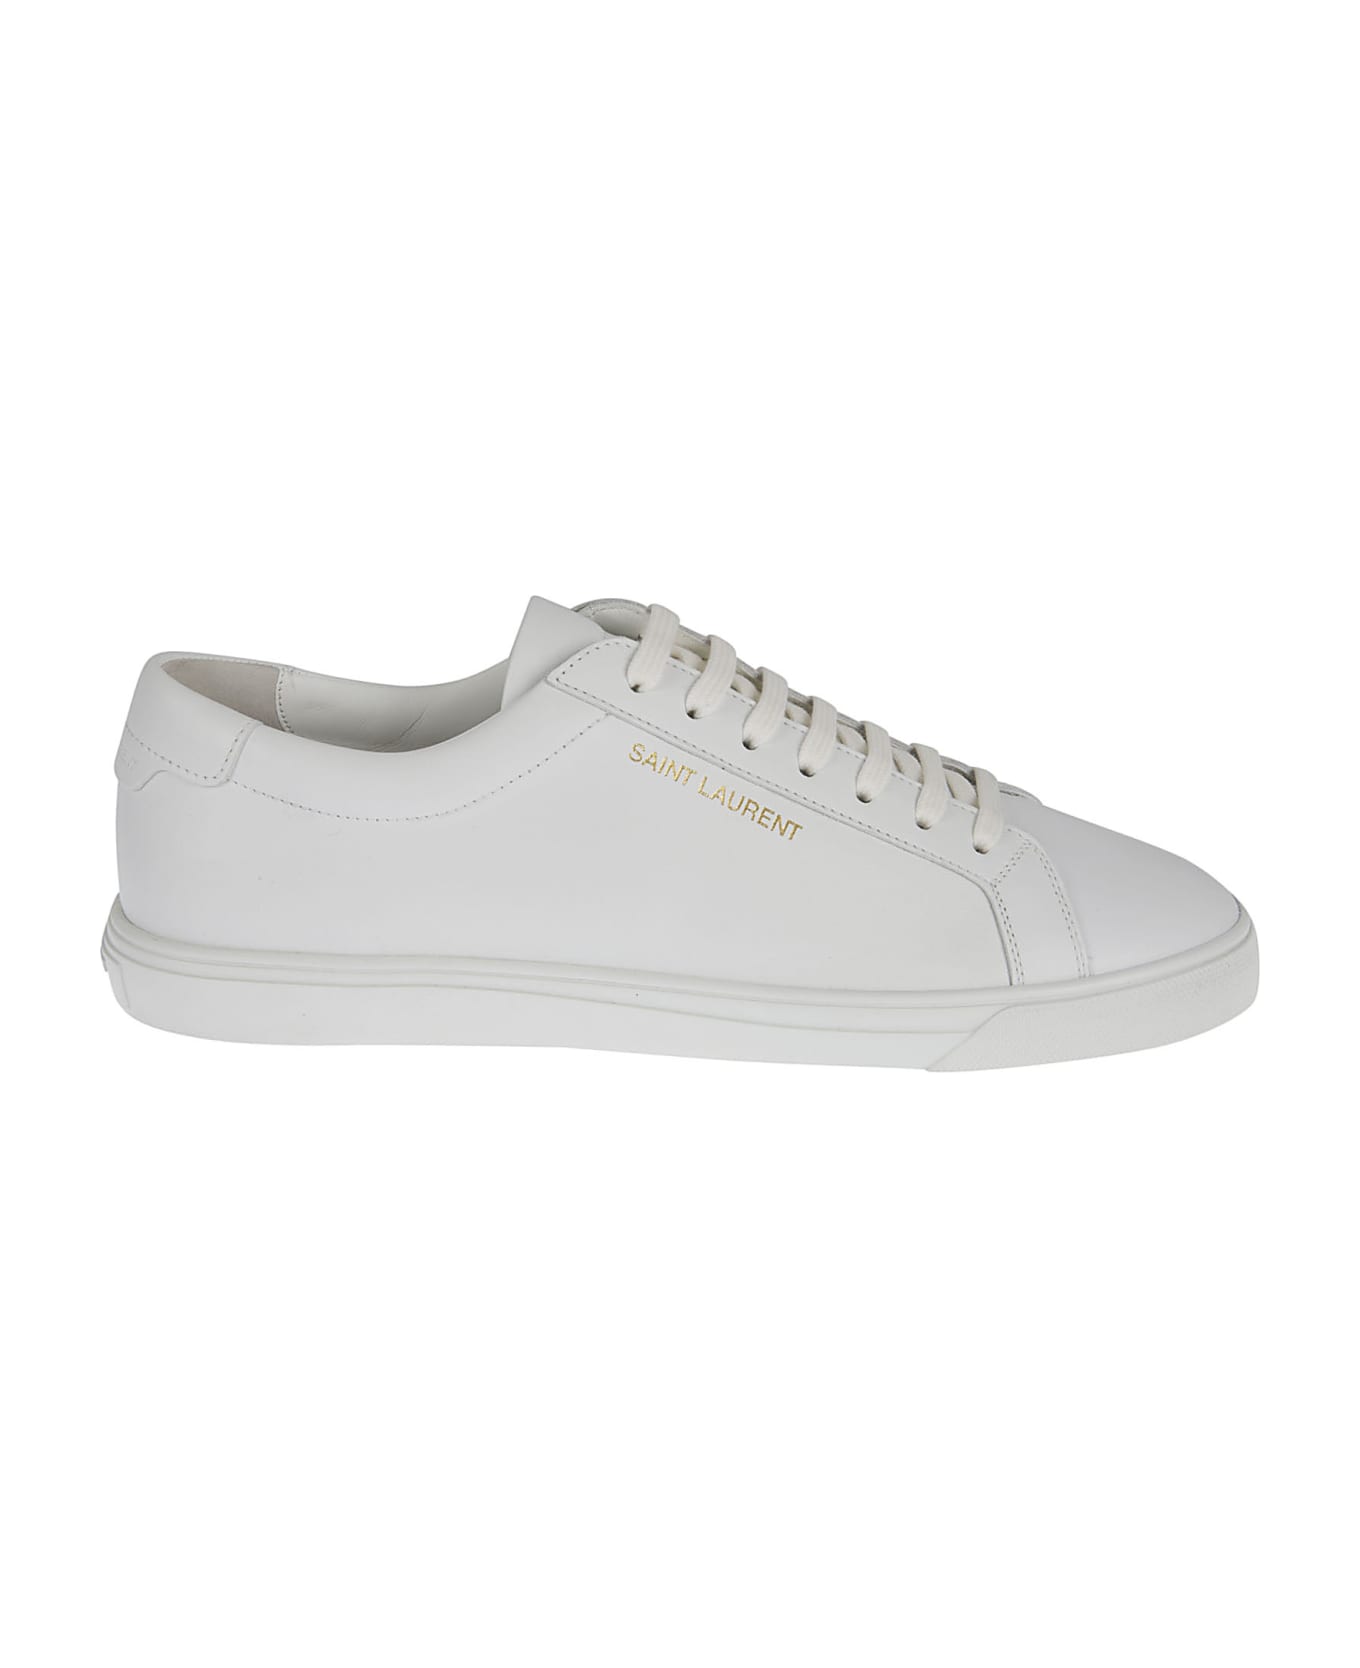 Saint Laurent Moon Plus Sneakers - Optic White